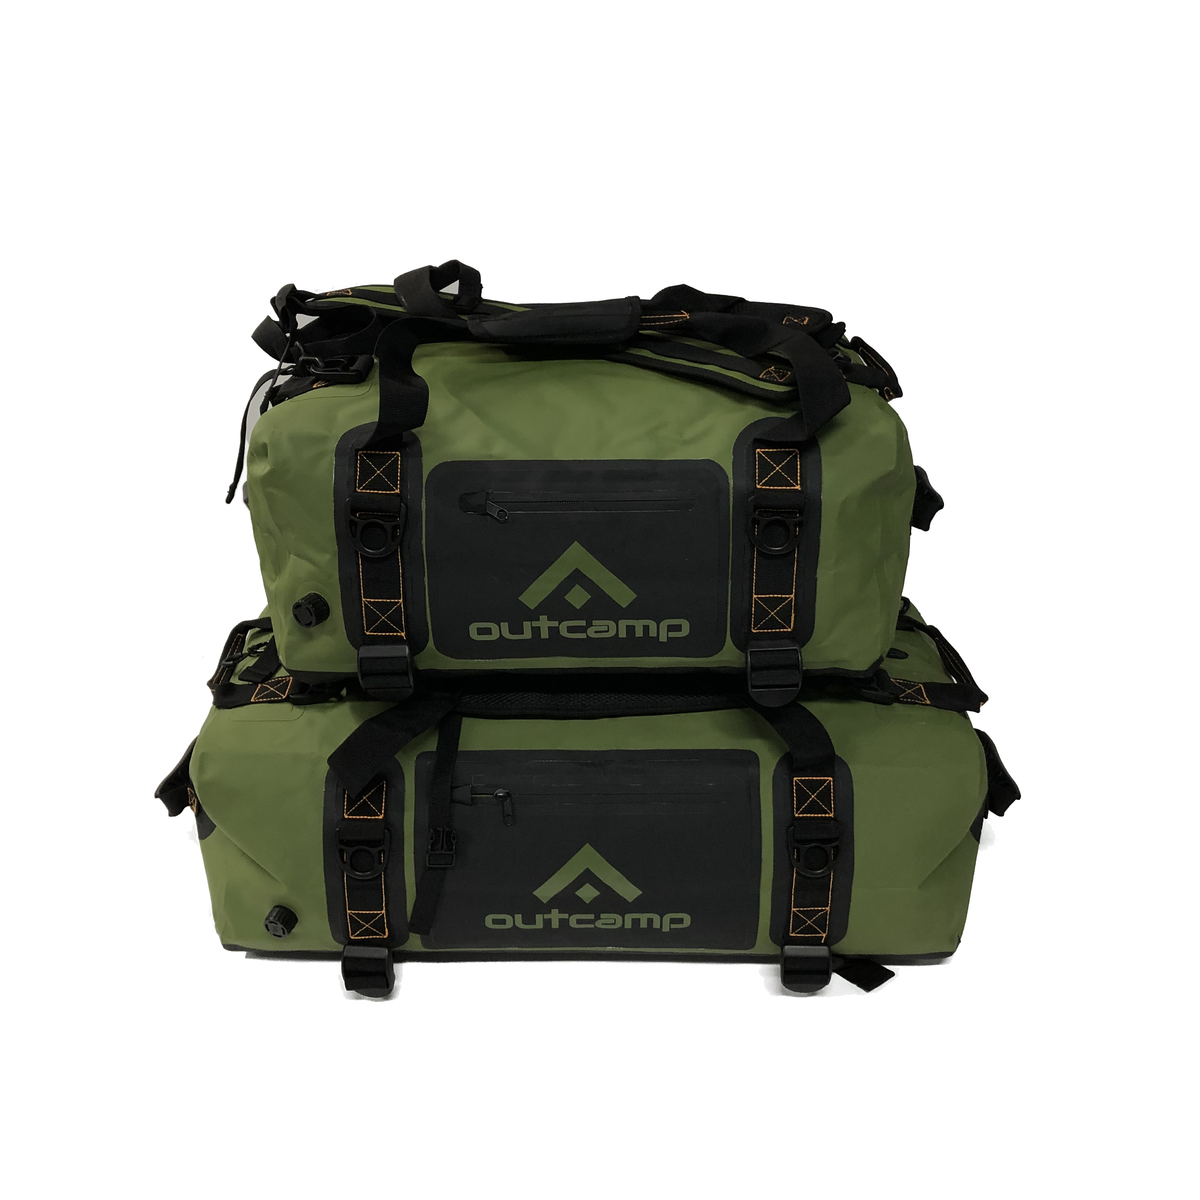 Outcamp waterproof gear / Duffel bags